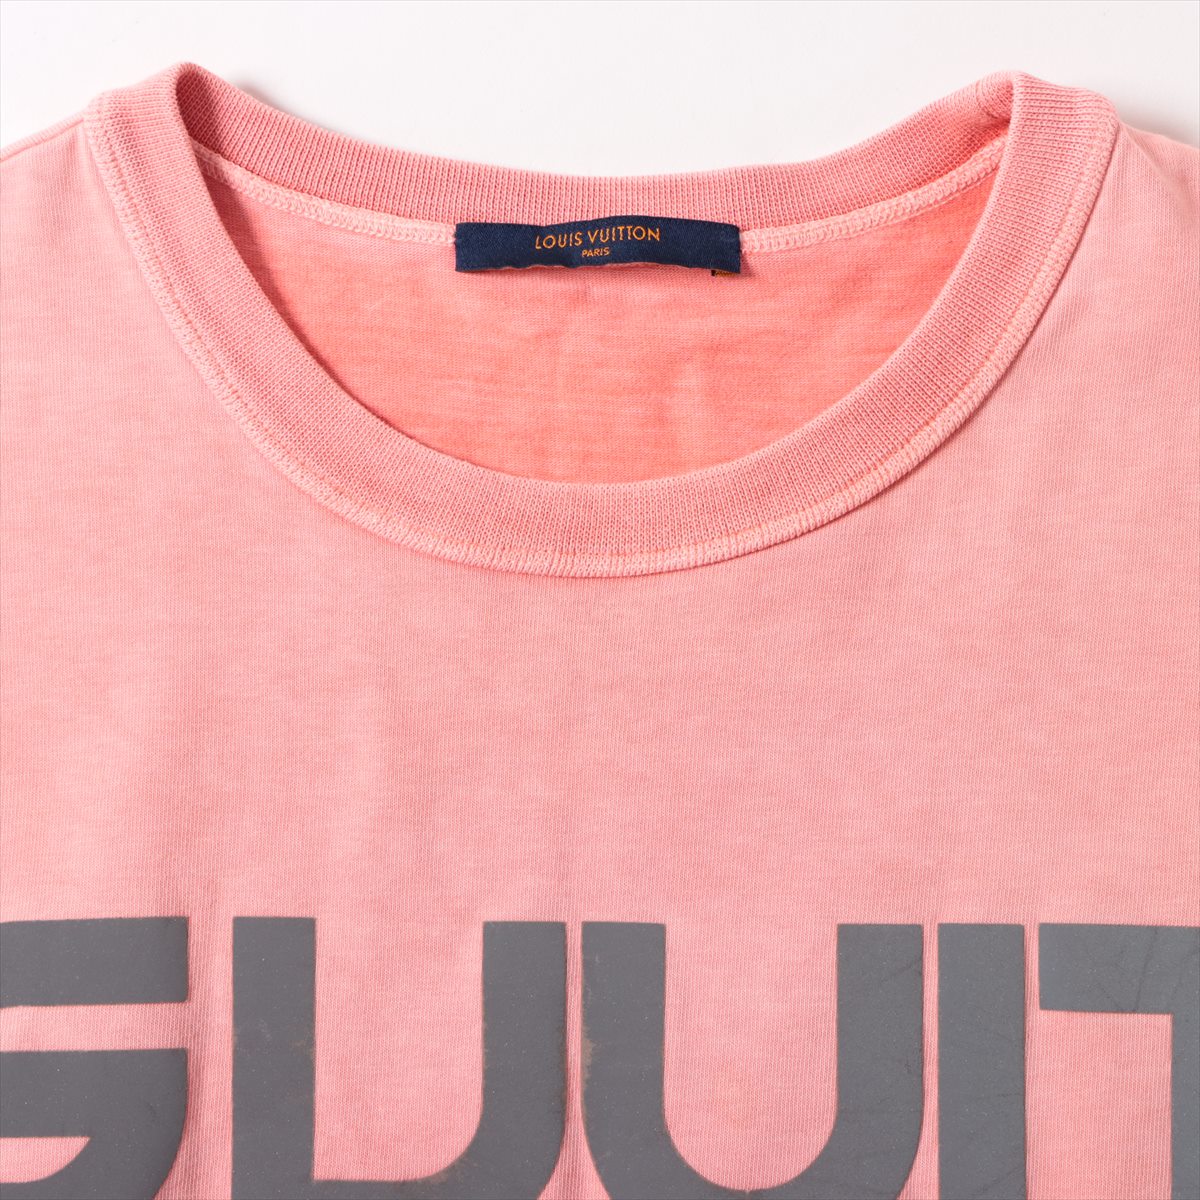 Louis Vuitton 18SS Cotton T-shirt S Men's Pink  RM181